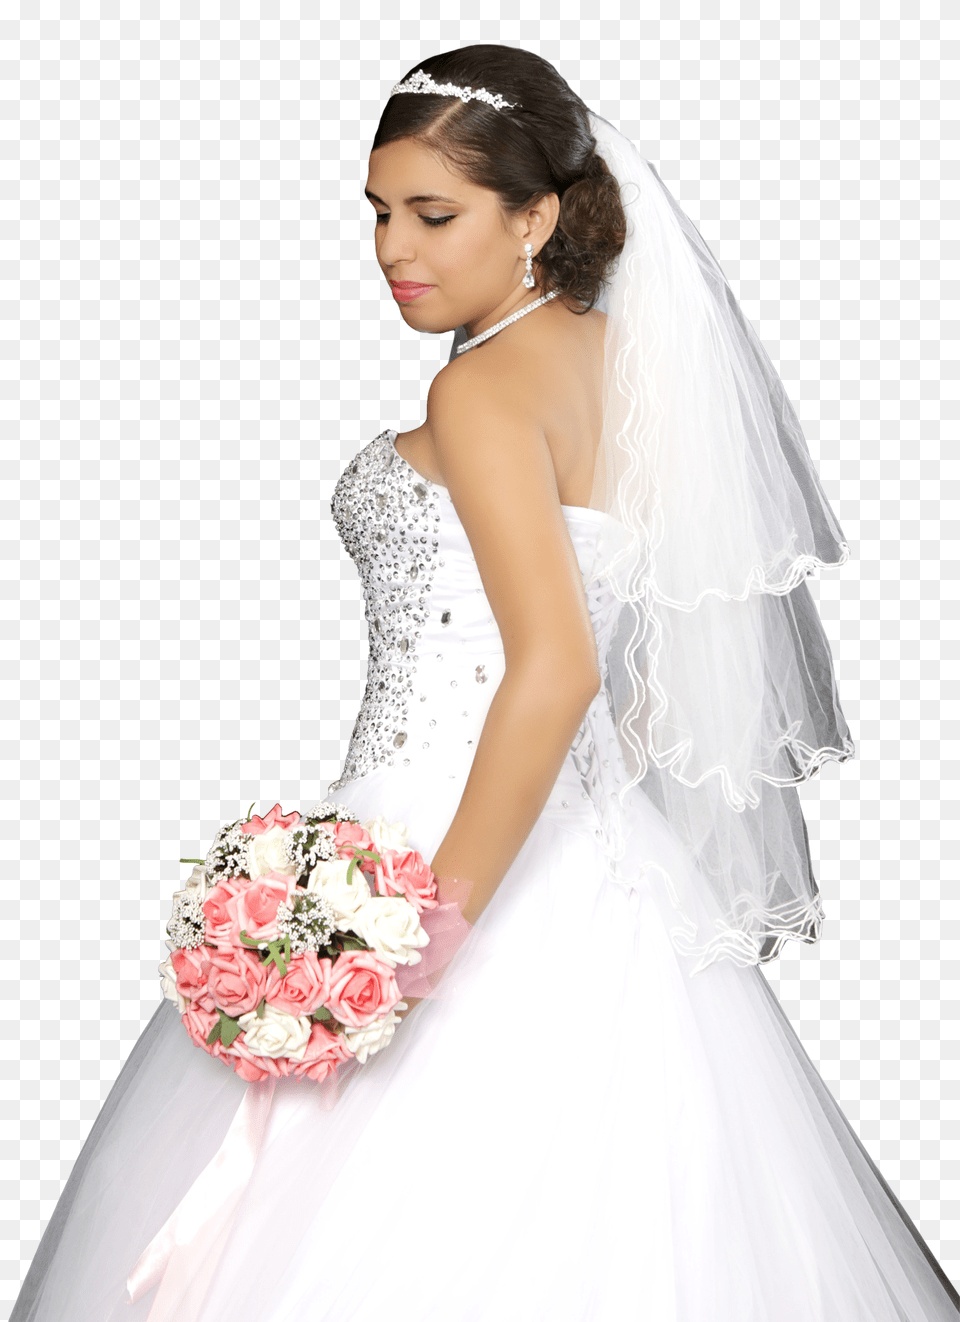 Pngpix Com Wedding Girl Transparent, Flower Bouquet, Formal Wear, Plant, Flower Arrangement Free Png